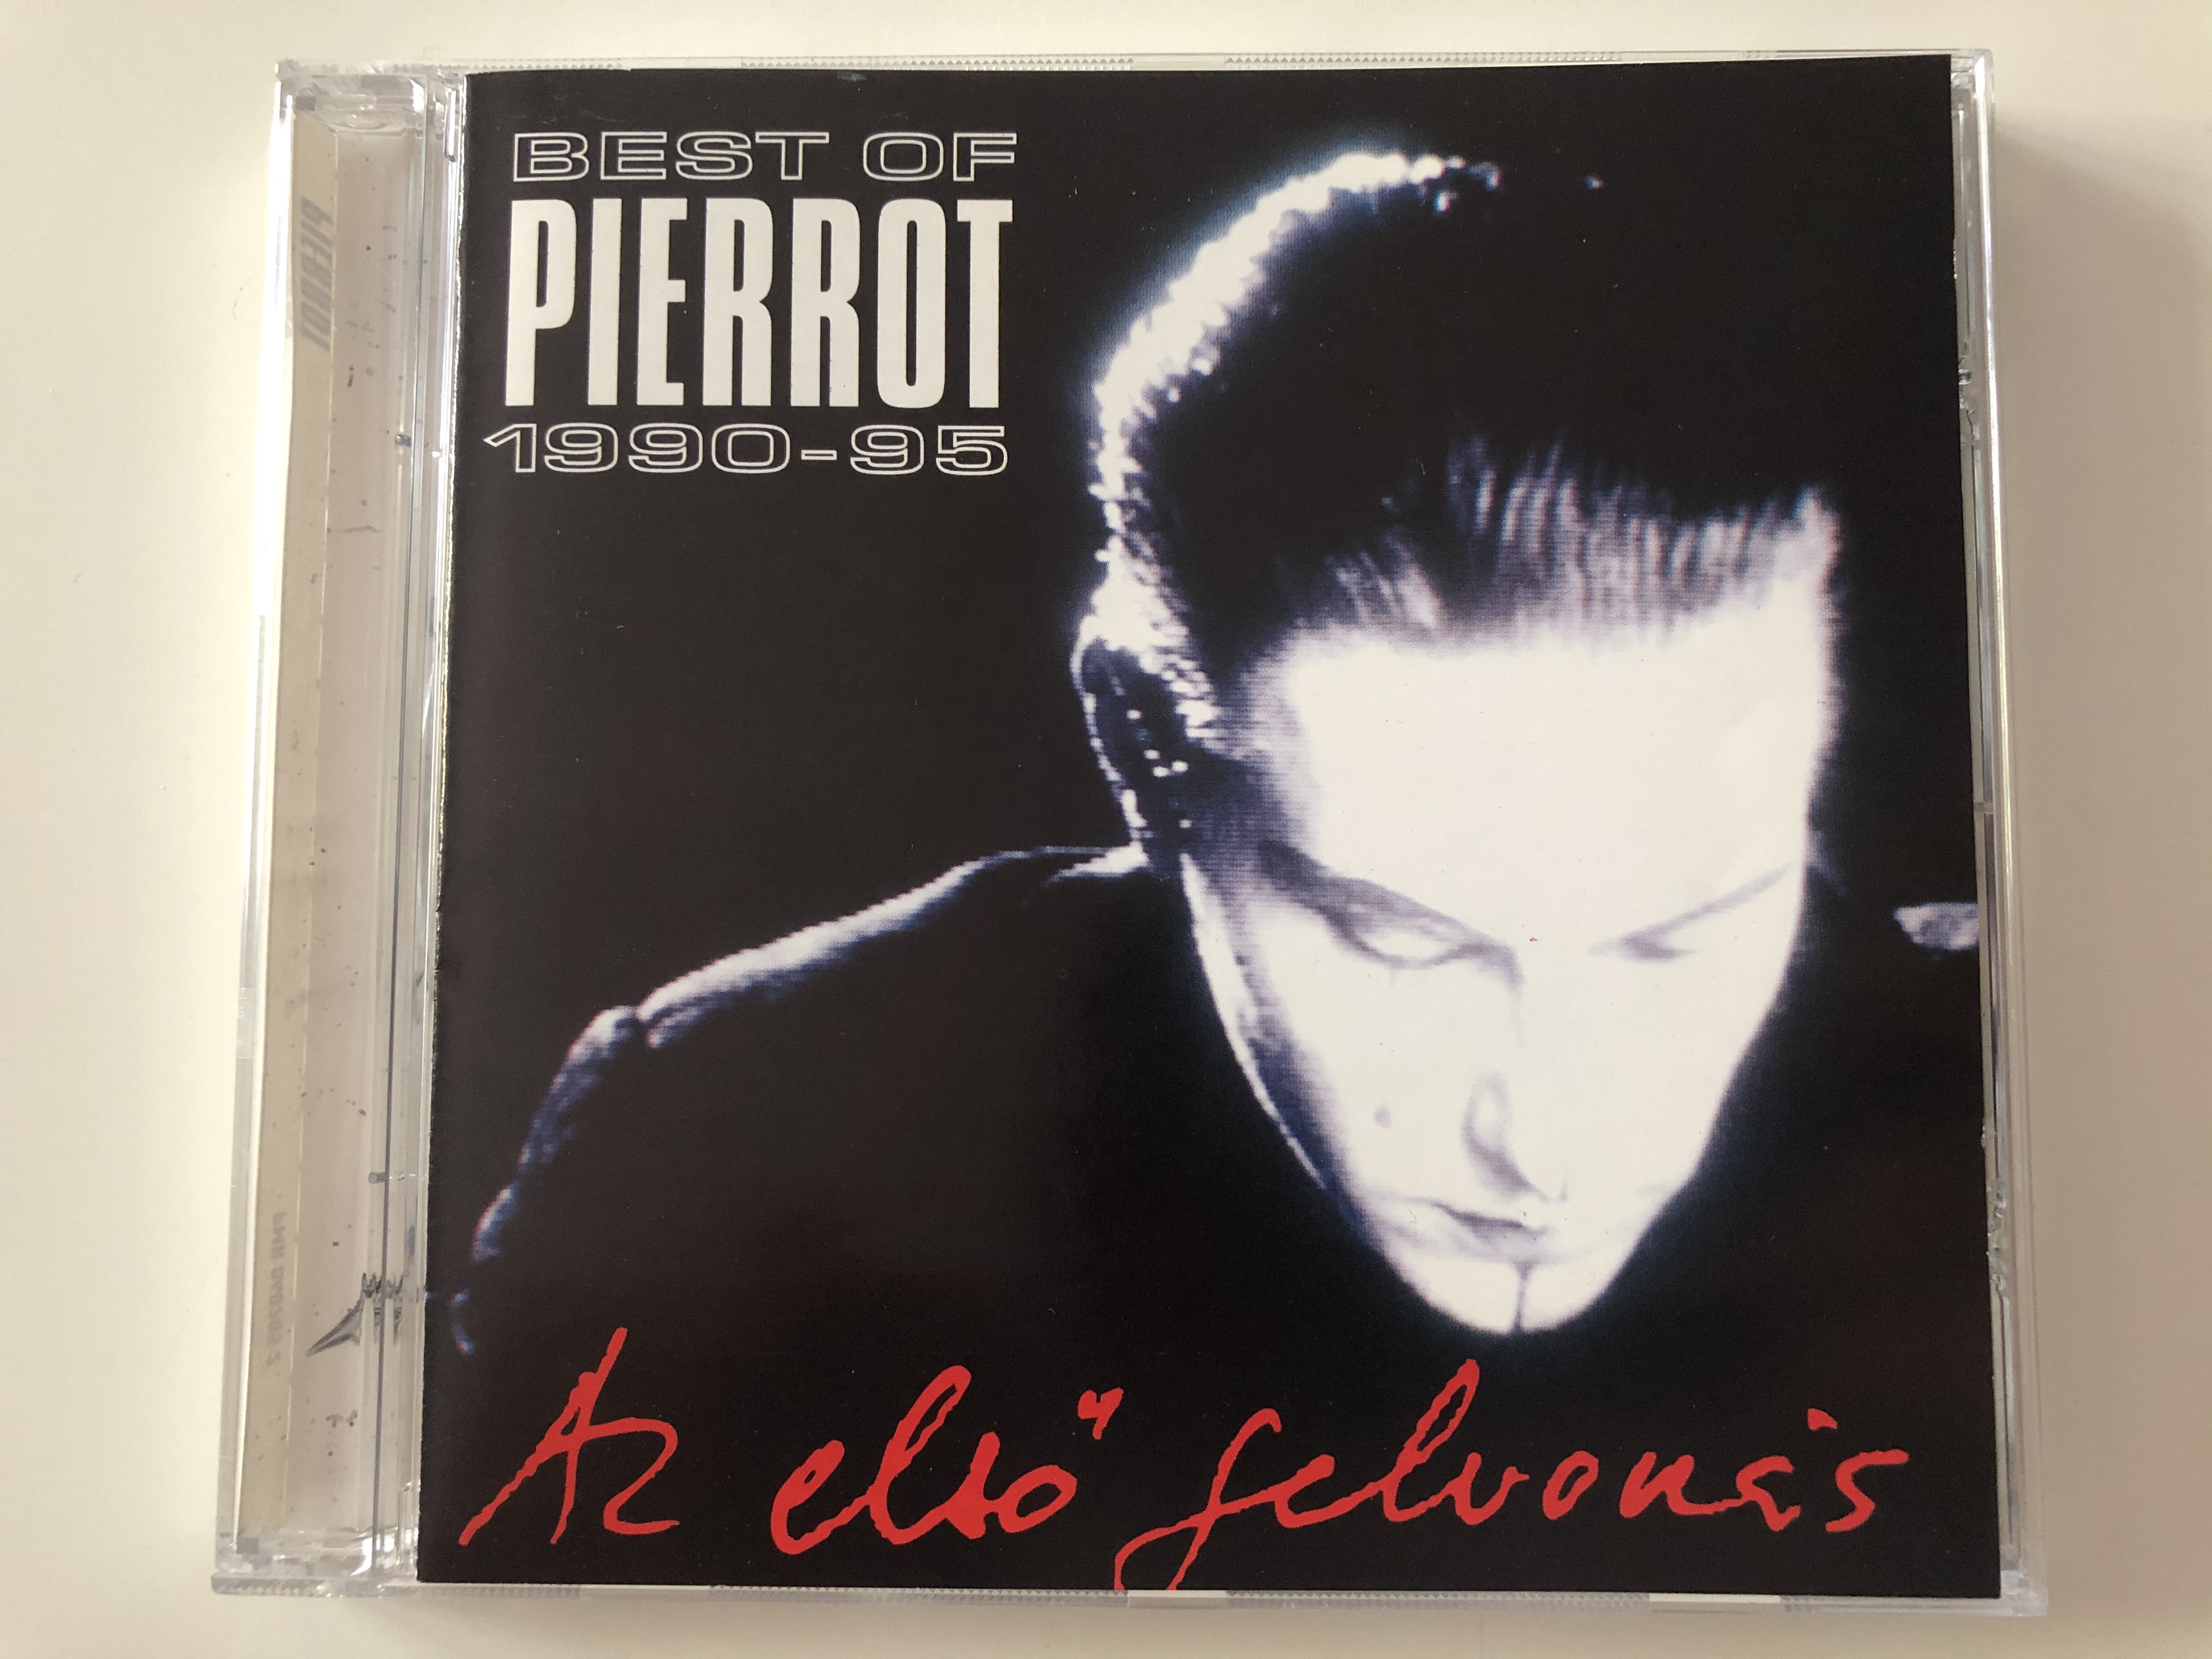 best-of-pierrot-1990-95-az-els-felvon-s-private-moon-records-audio-cd-2002-pmr-040205-2-1-.jpg